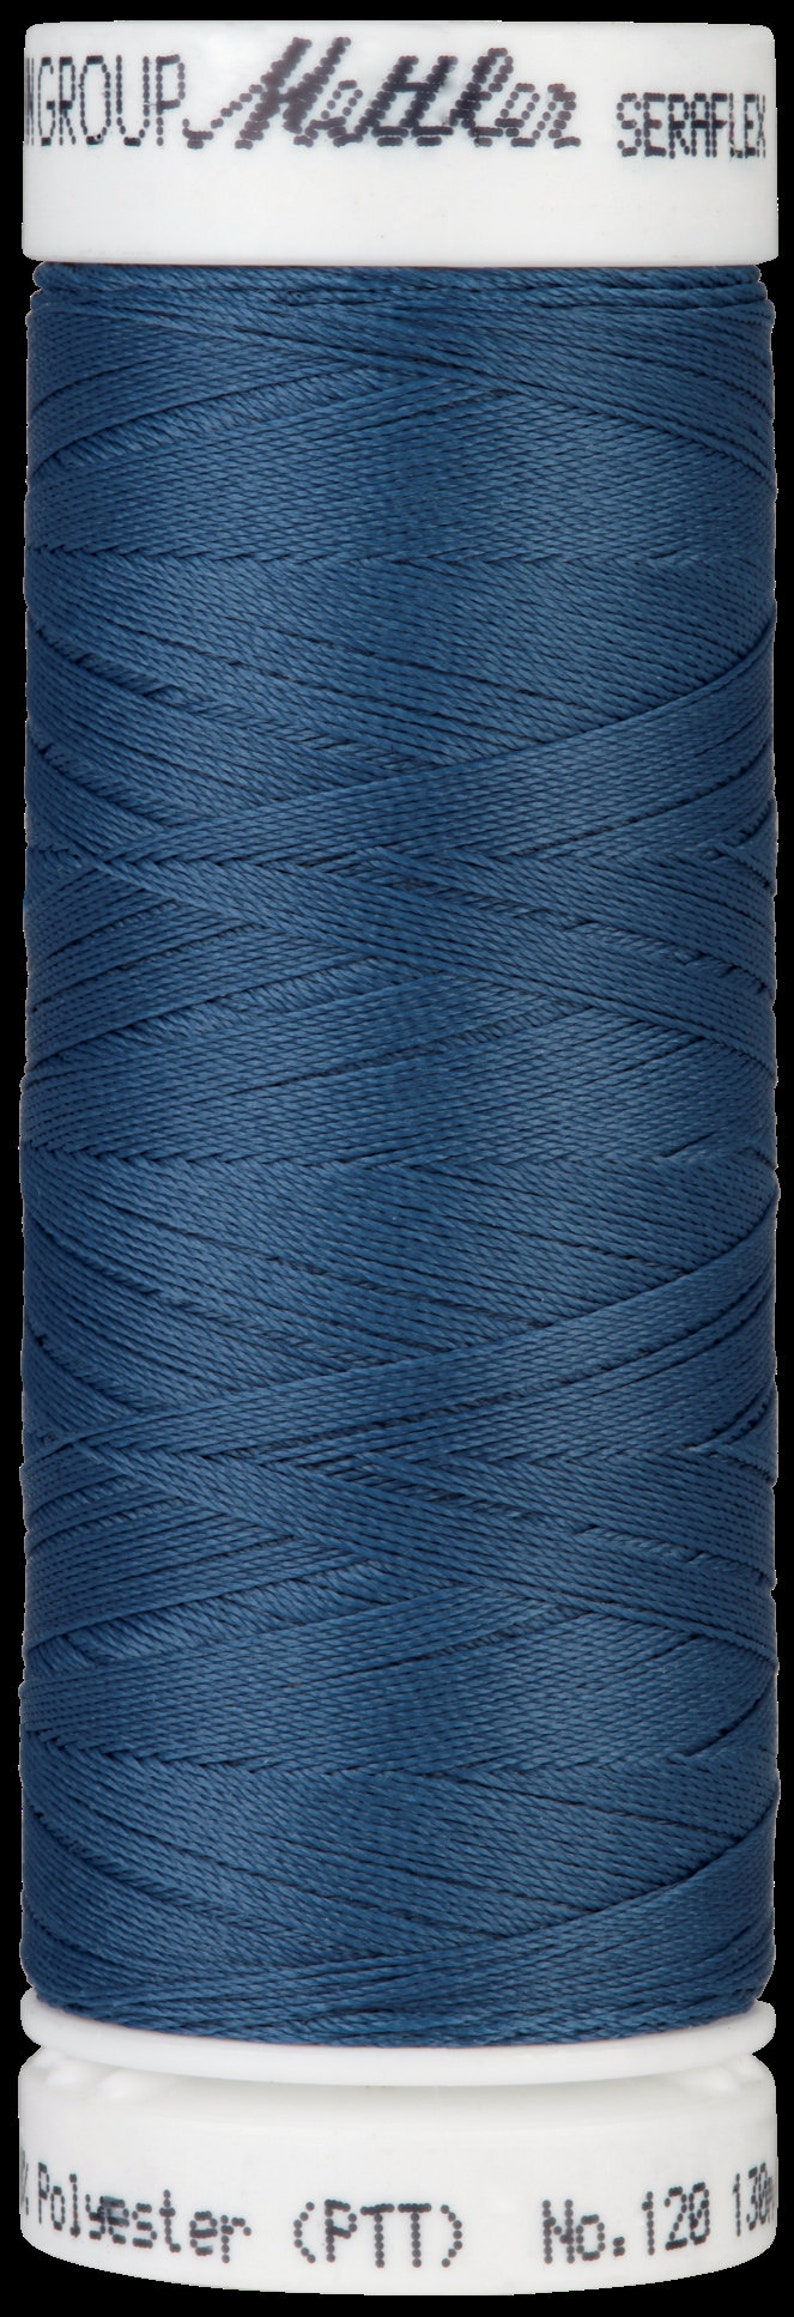 NEUE Farben Seraflex 120 flexibler Faden Nähfaden pink rosa blau Mettler blue agate